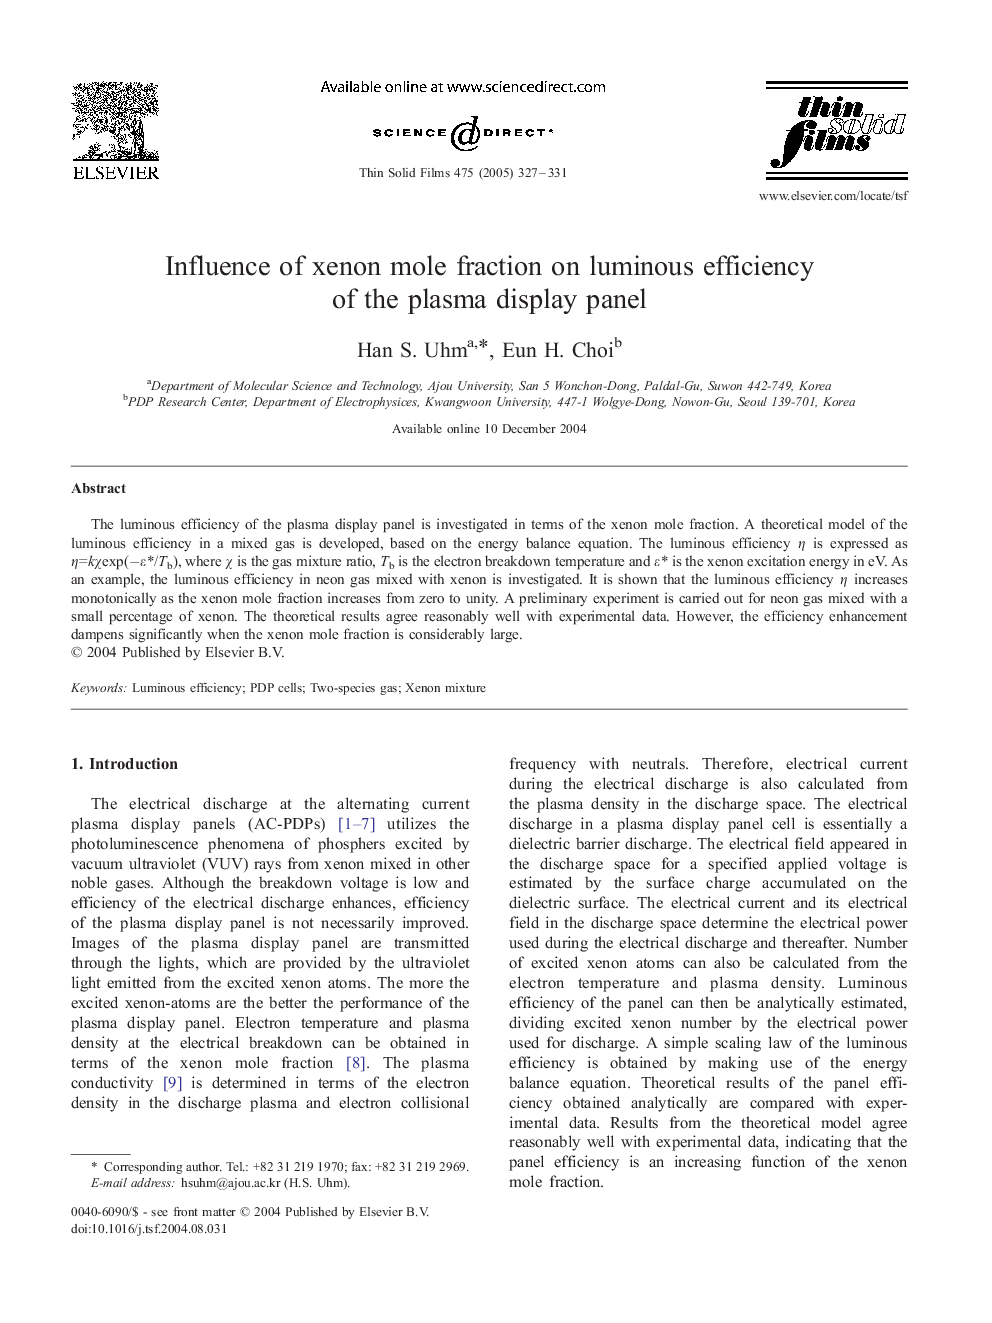 Influence of xenon mole fraction on luminous efficiency of the plasma display panel